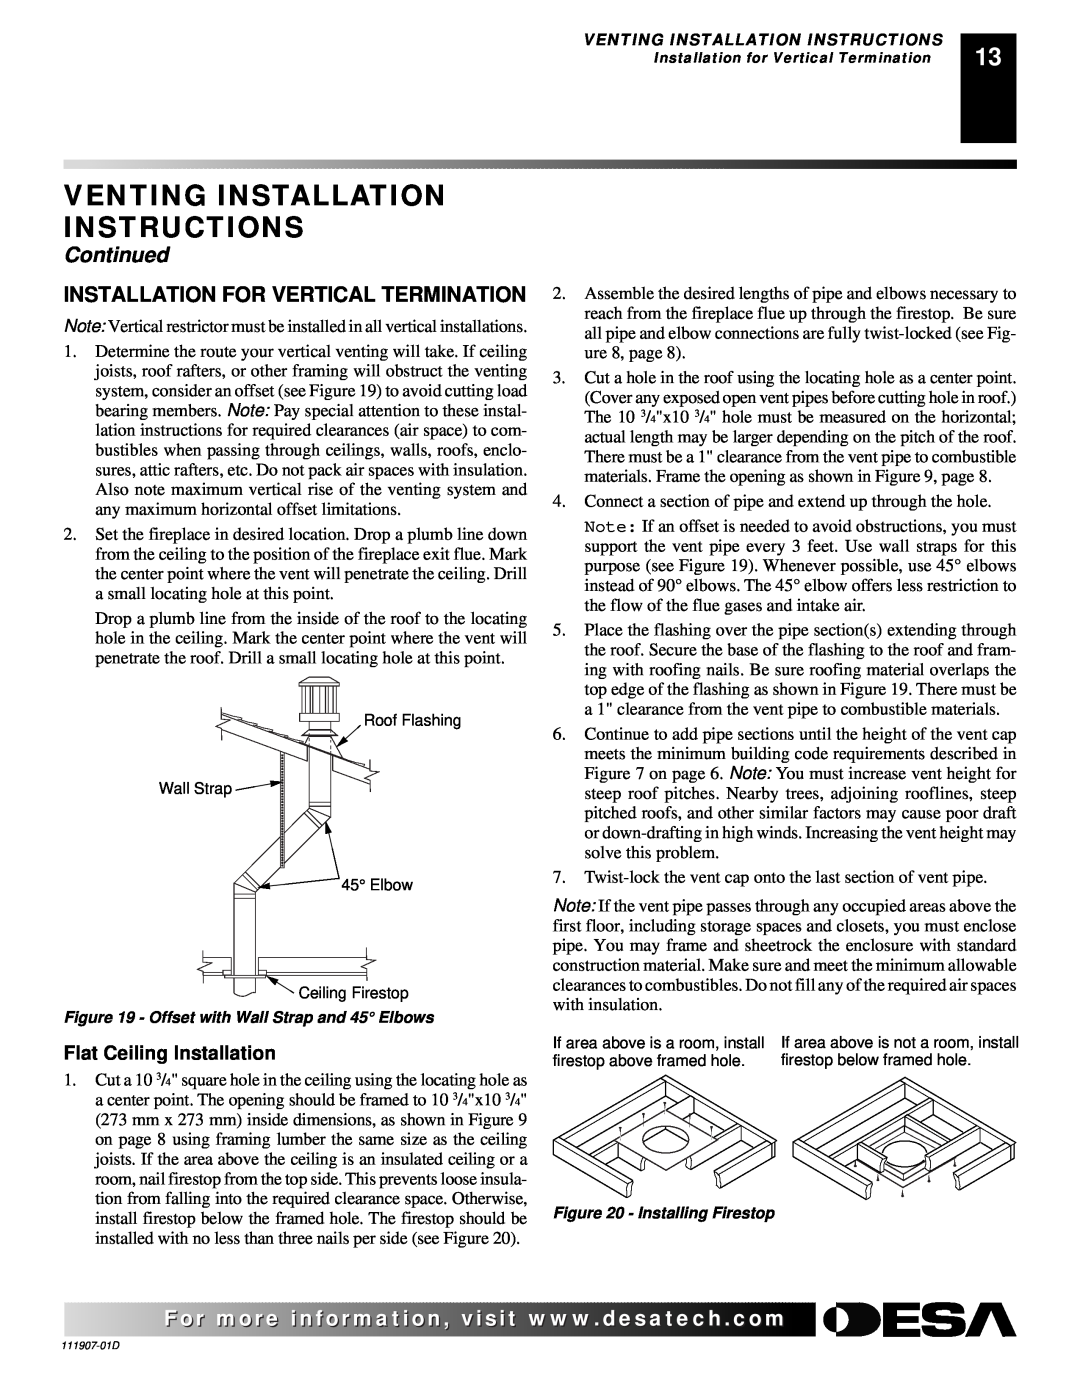 Desa VV42EPB(1), VV42ENB(1), V42EN-A Venting Installation Instructions, Continued, Installation For Vertical Termination 